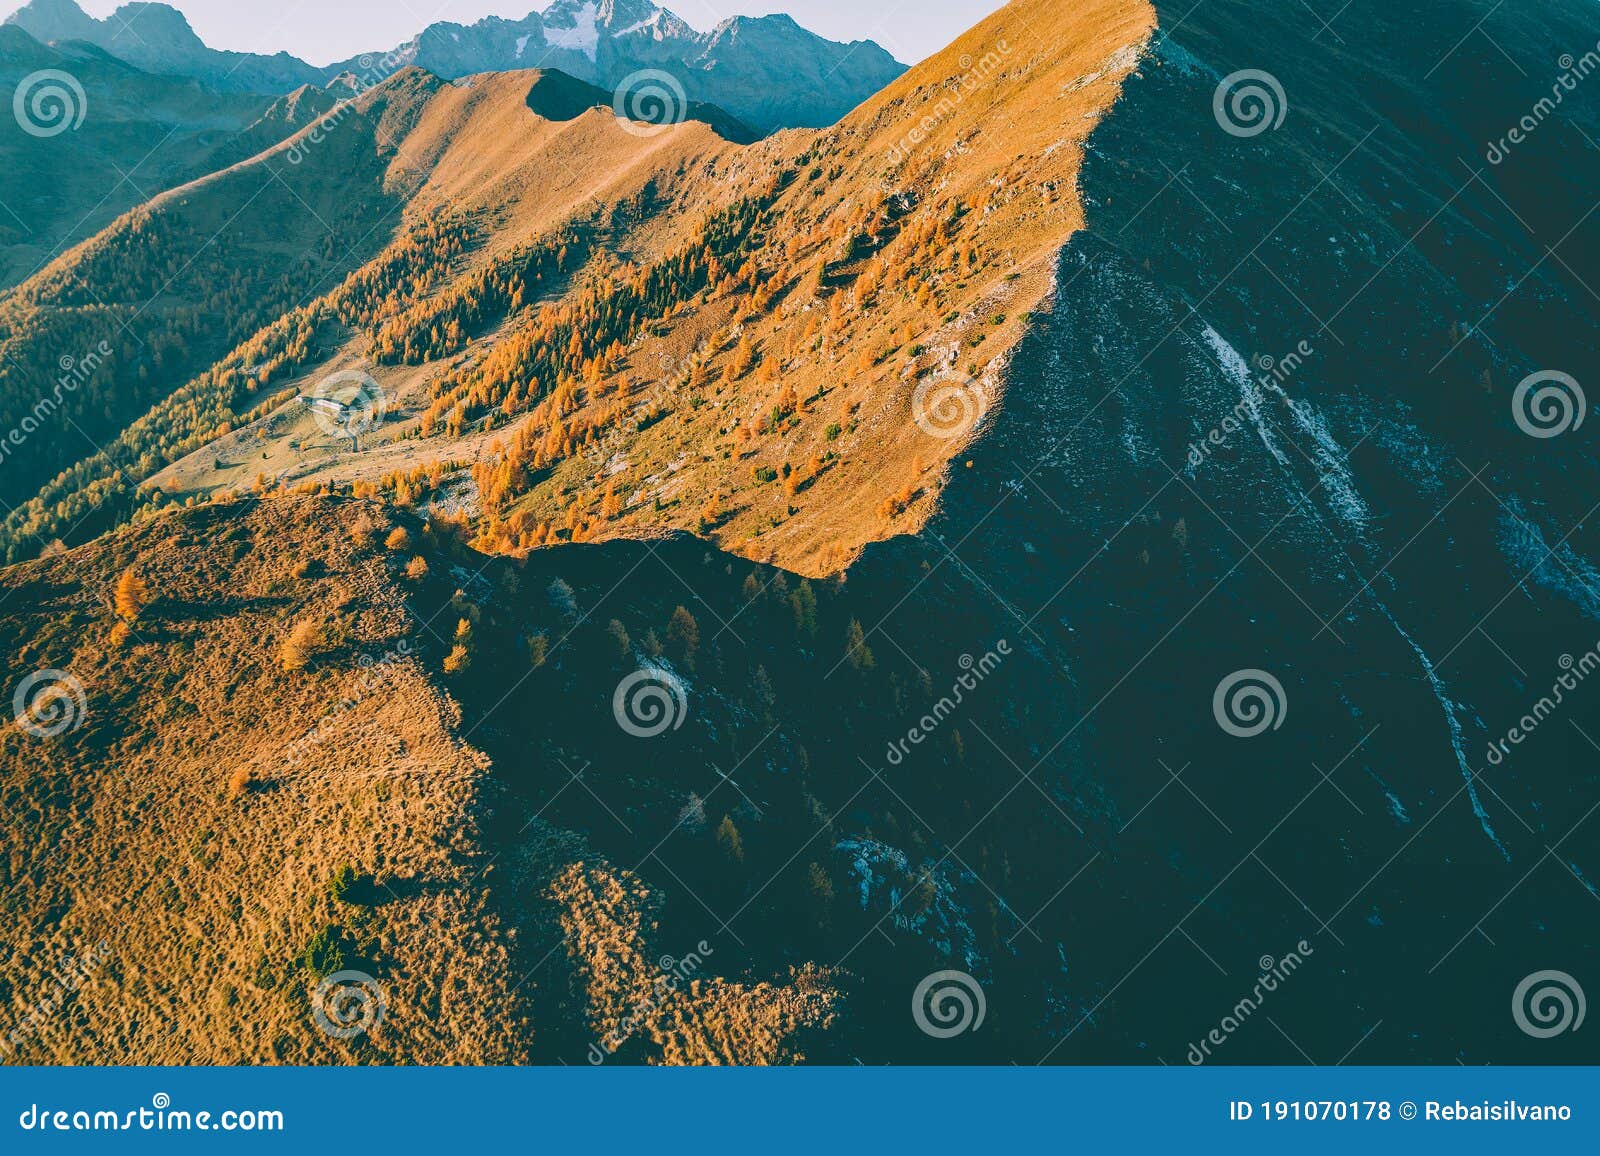 sondrio - valtellina it - autumnal aerial view of alpe colina